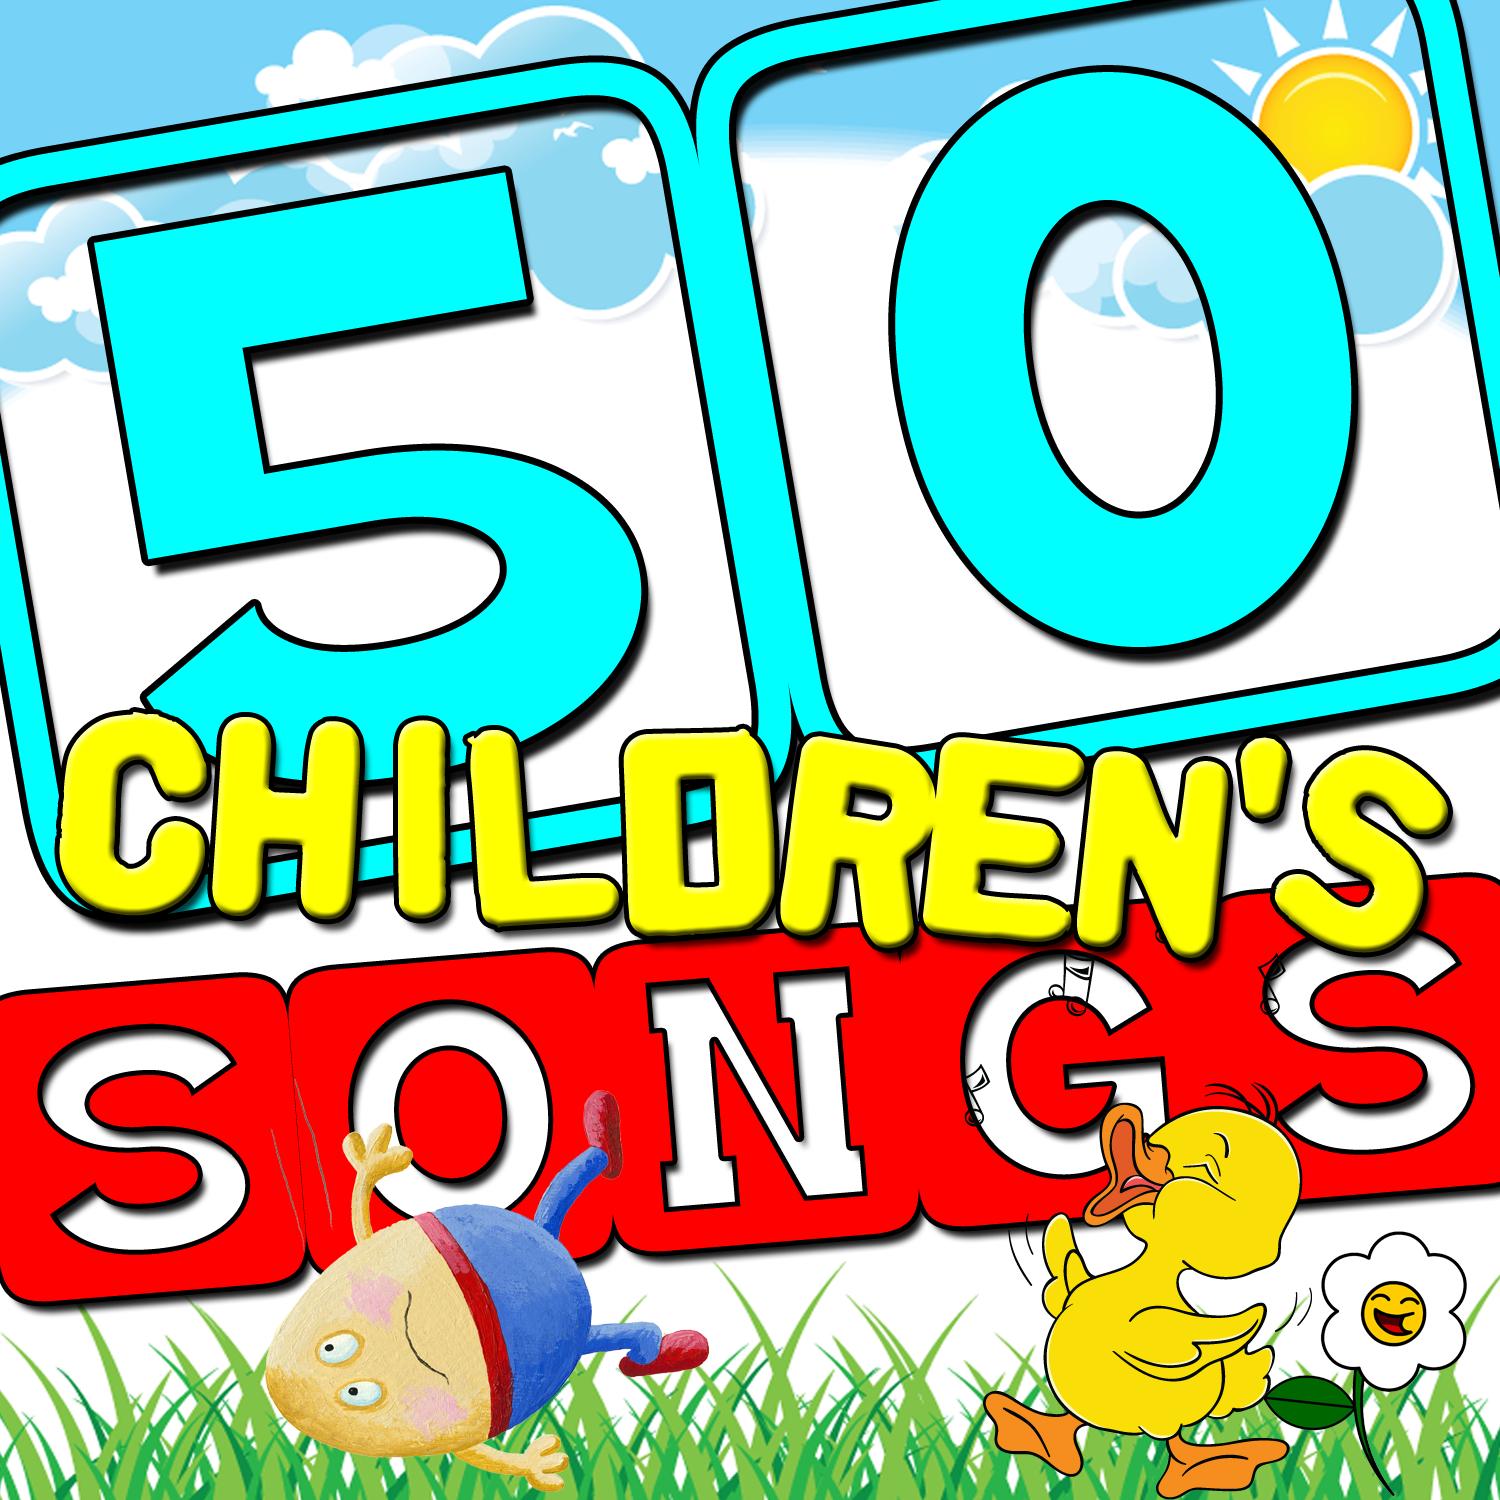 50 Children's Songs